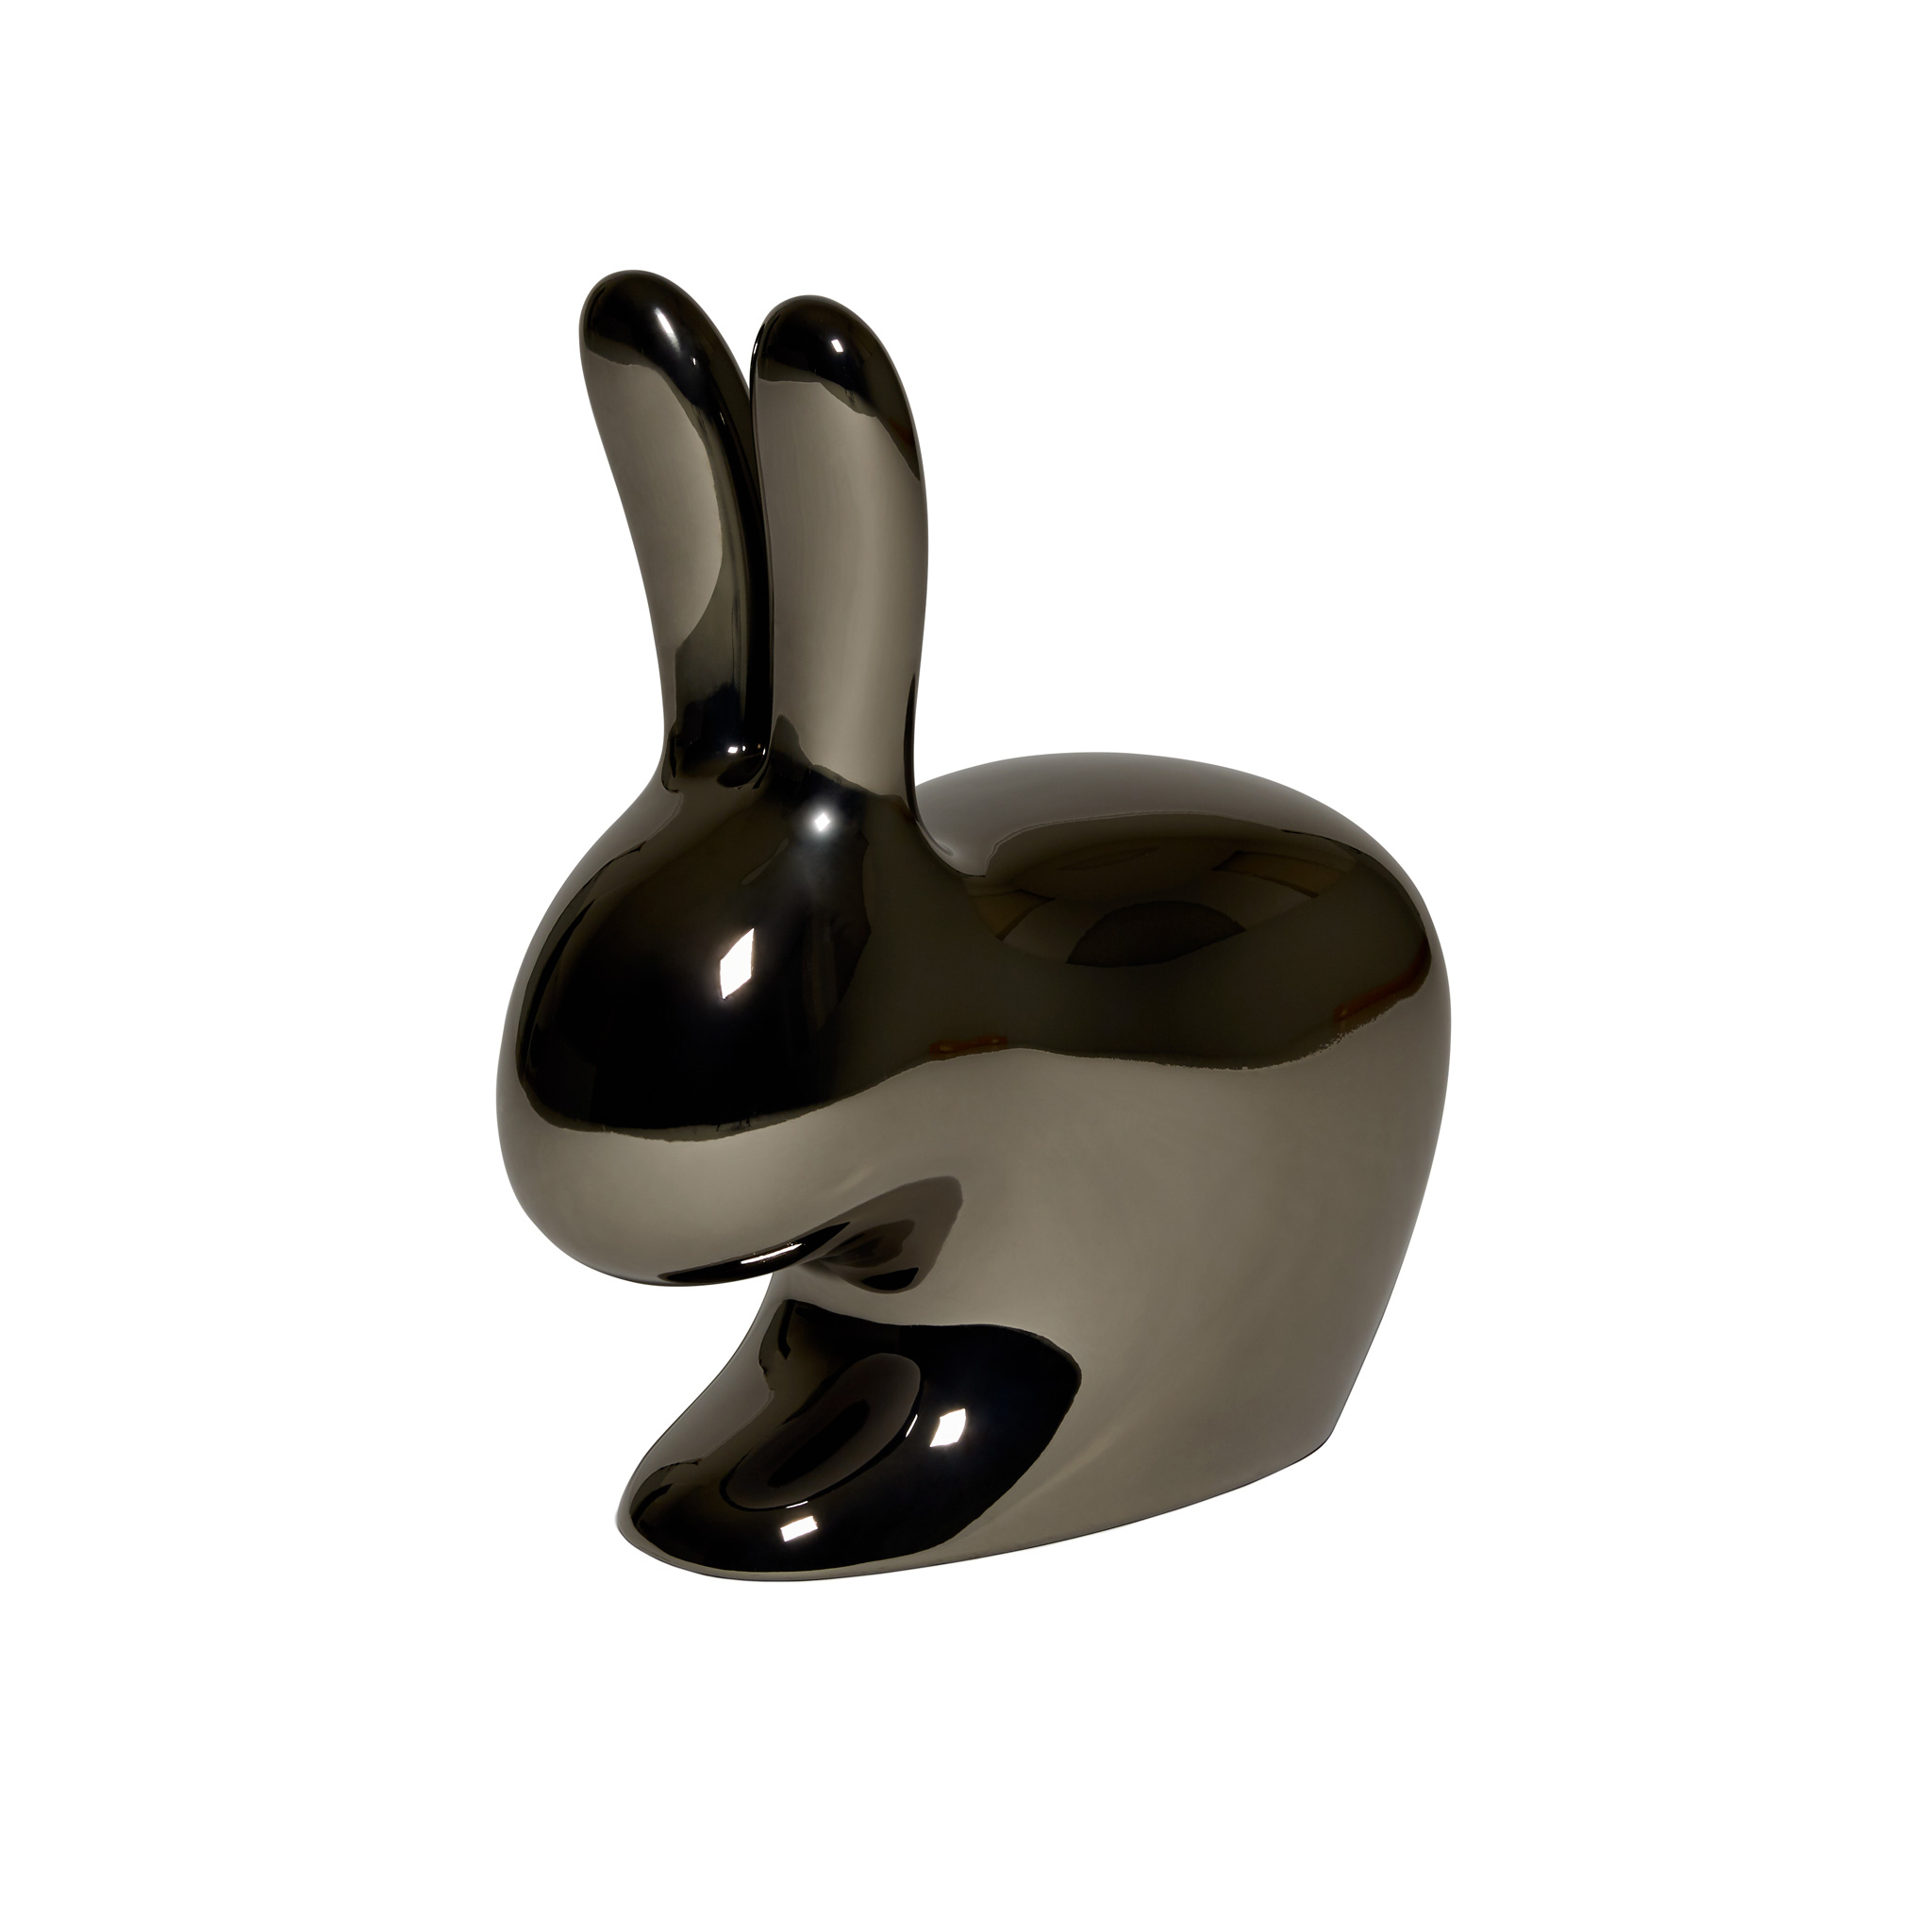 https://www.designboom.com/shop/wp-content/uploads/2017/07/04-qeeboo-rabbit-chair-metal-finish-by-stefano-giovannoni-titanium.jpg